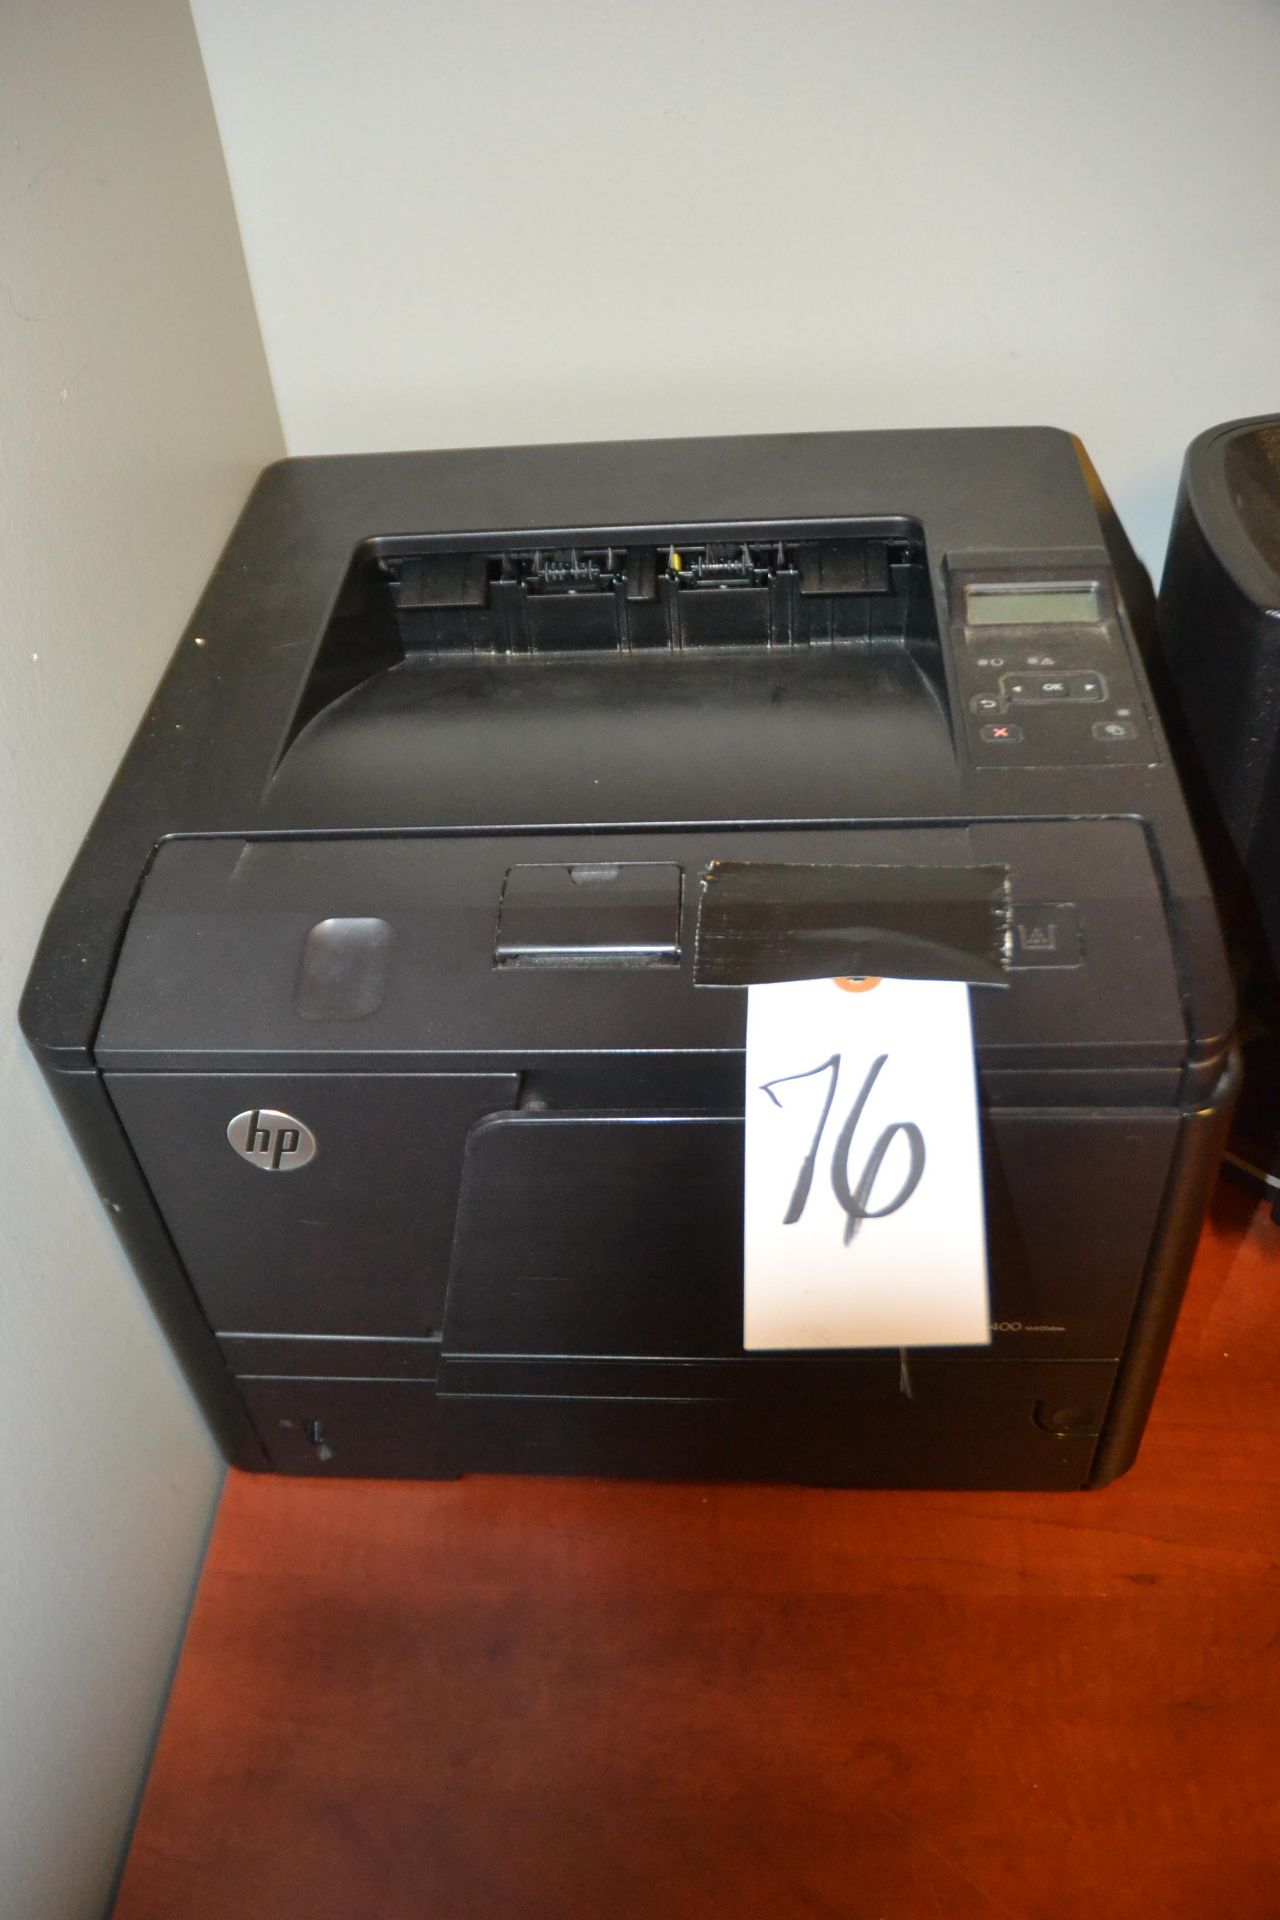 HP Laserjet Pro 400 Printer